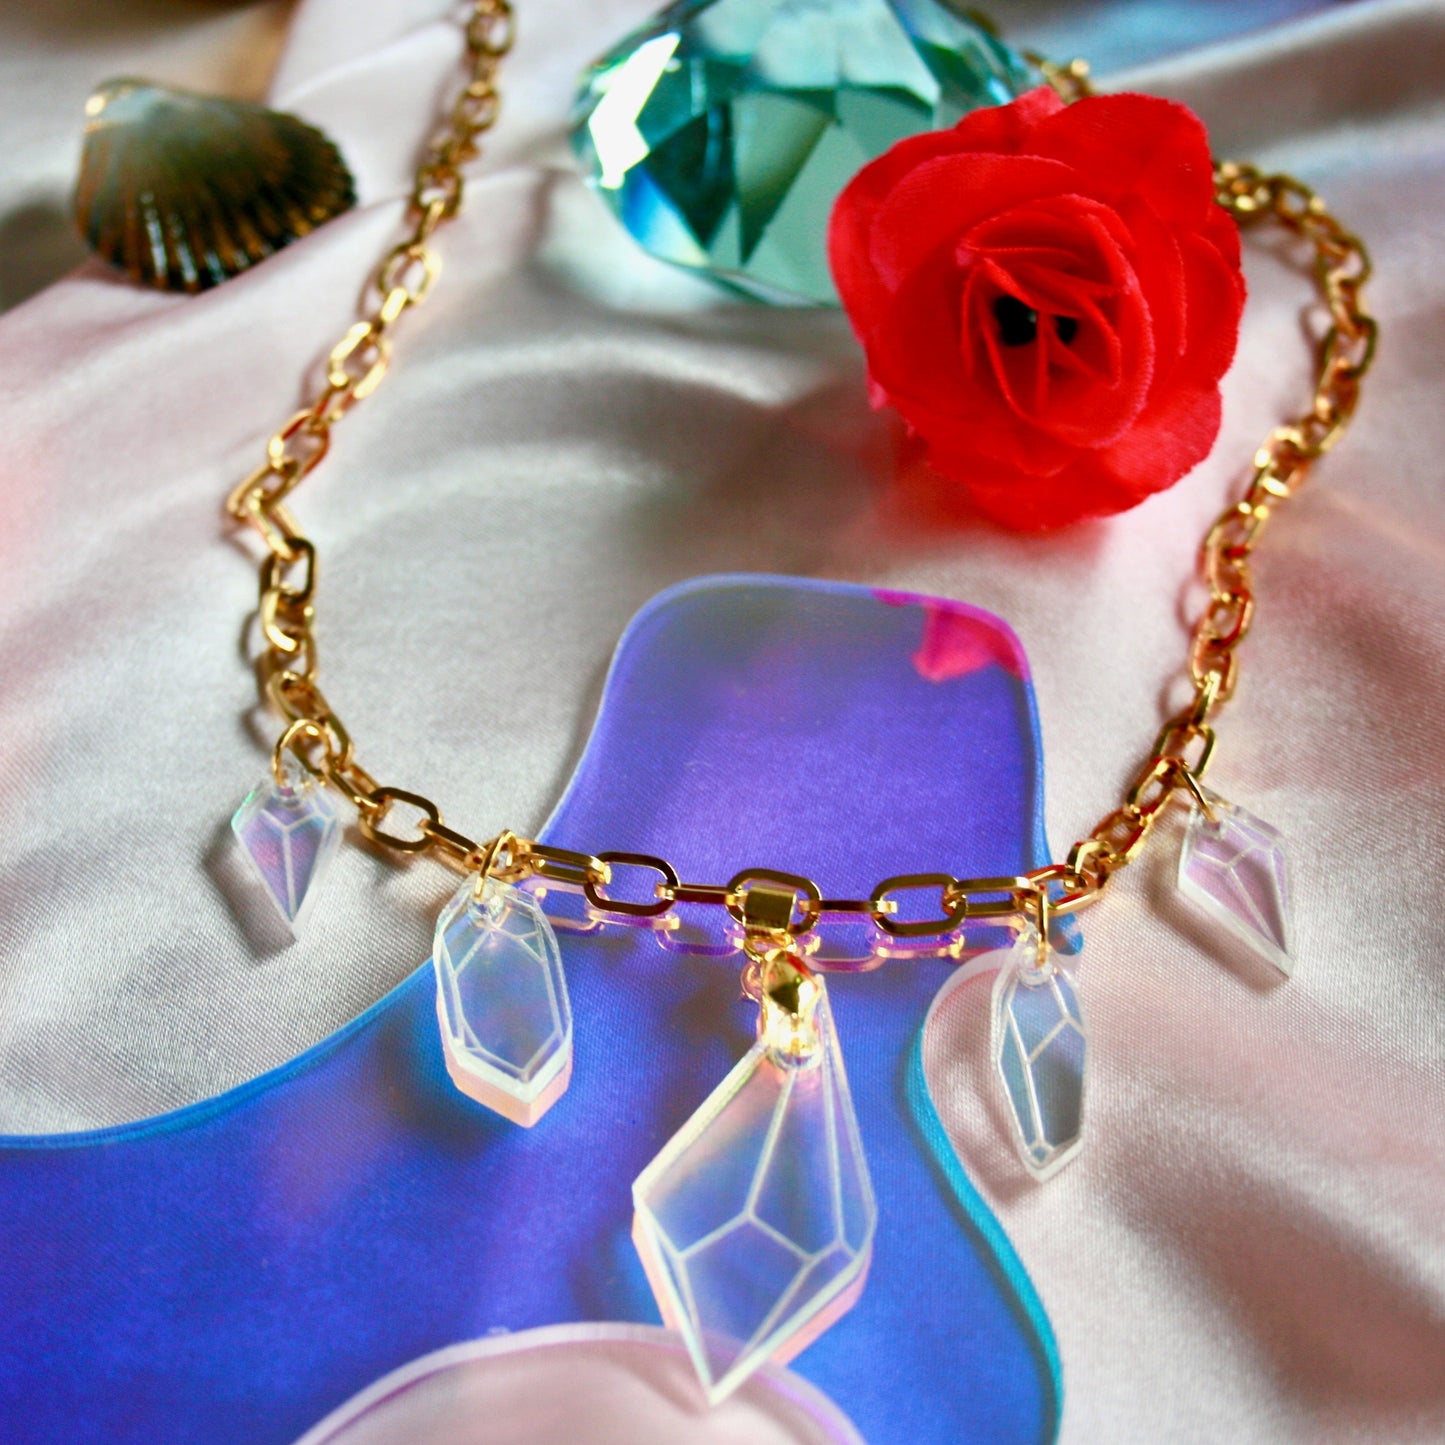 Iridescent Prism Necklace - Lasercut Holo Rainbow Reflective Suncatcher Crystal Gold Chain